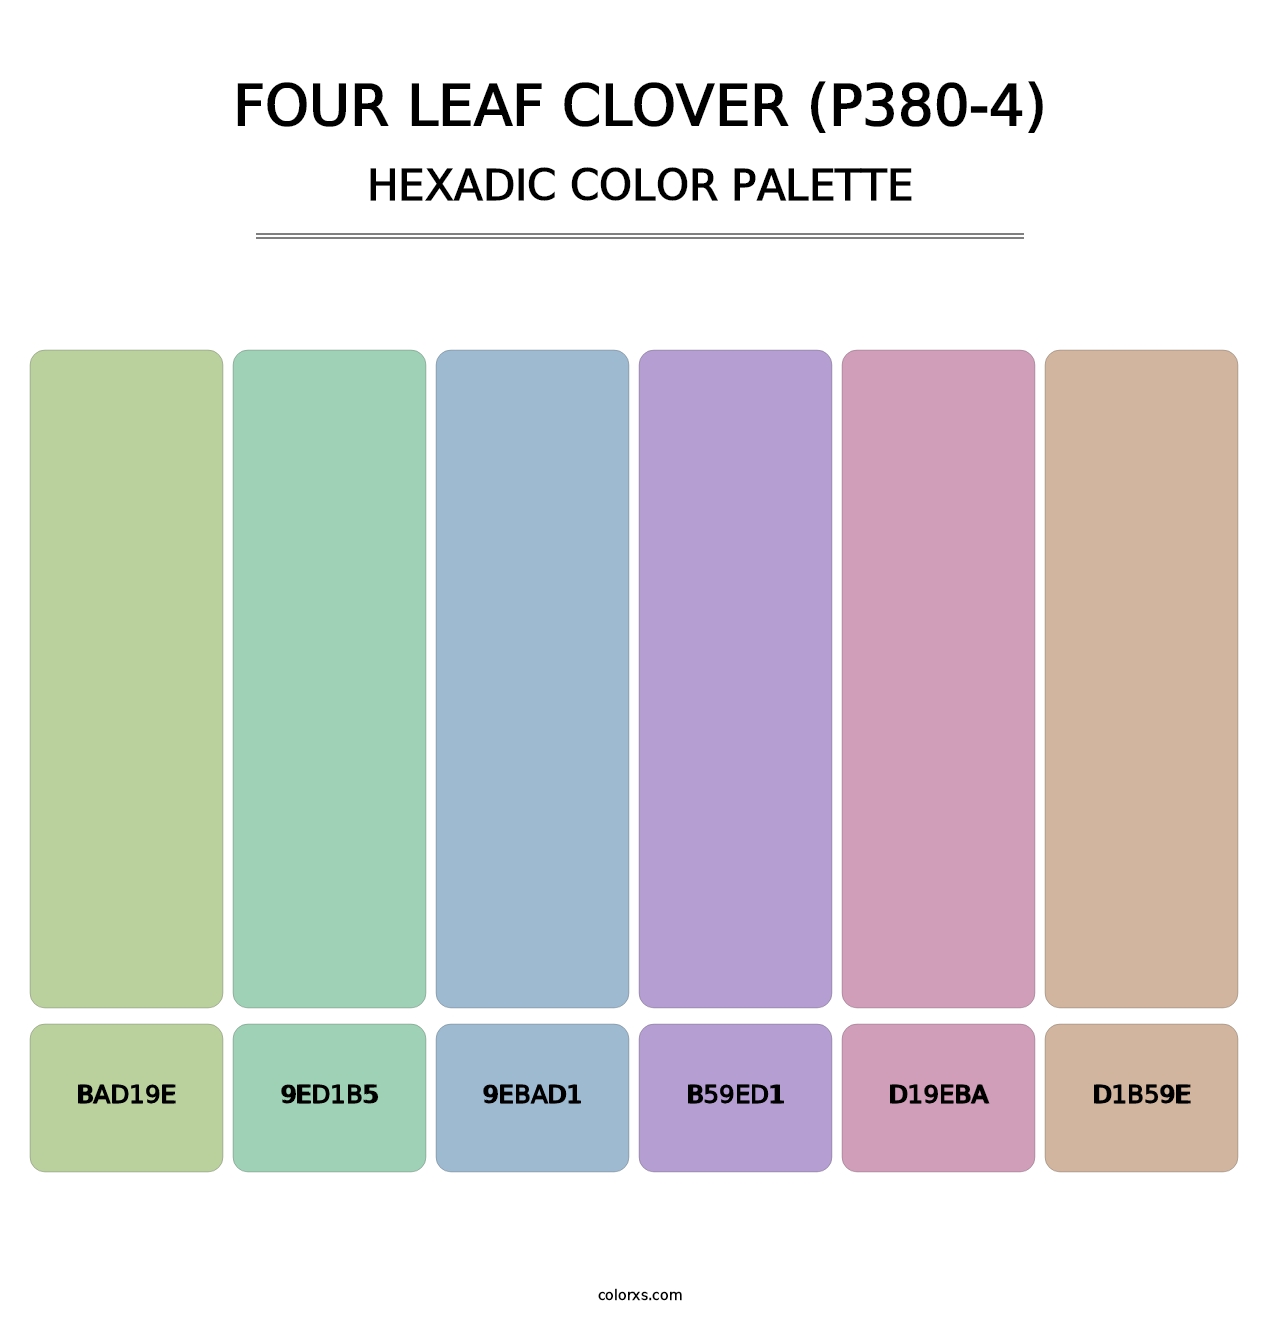 Four Leaf Clover (P380-4) - Hexadic Color Palette